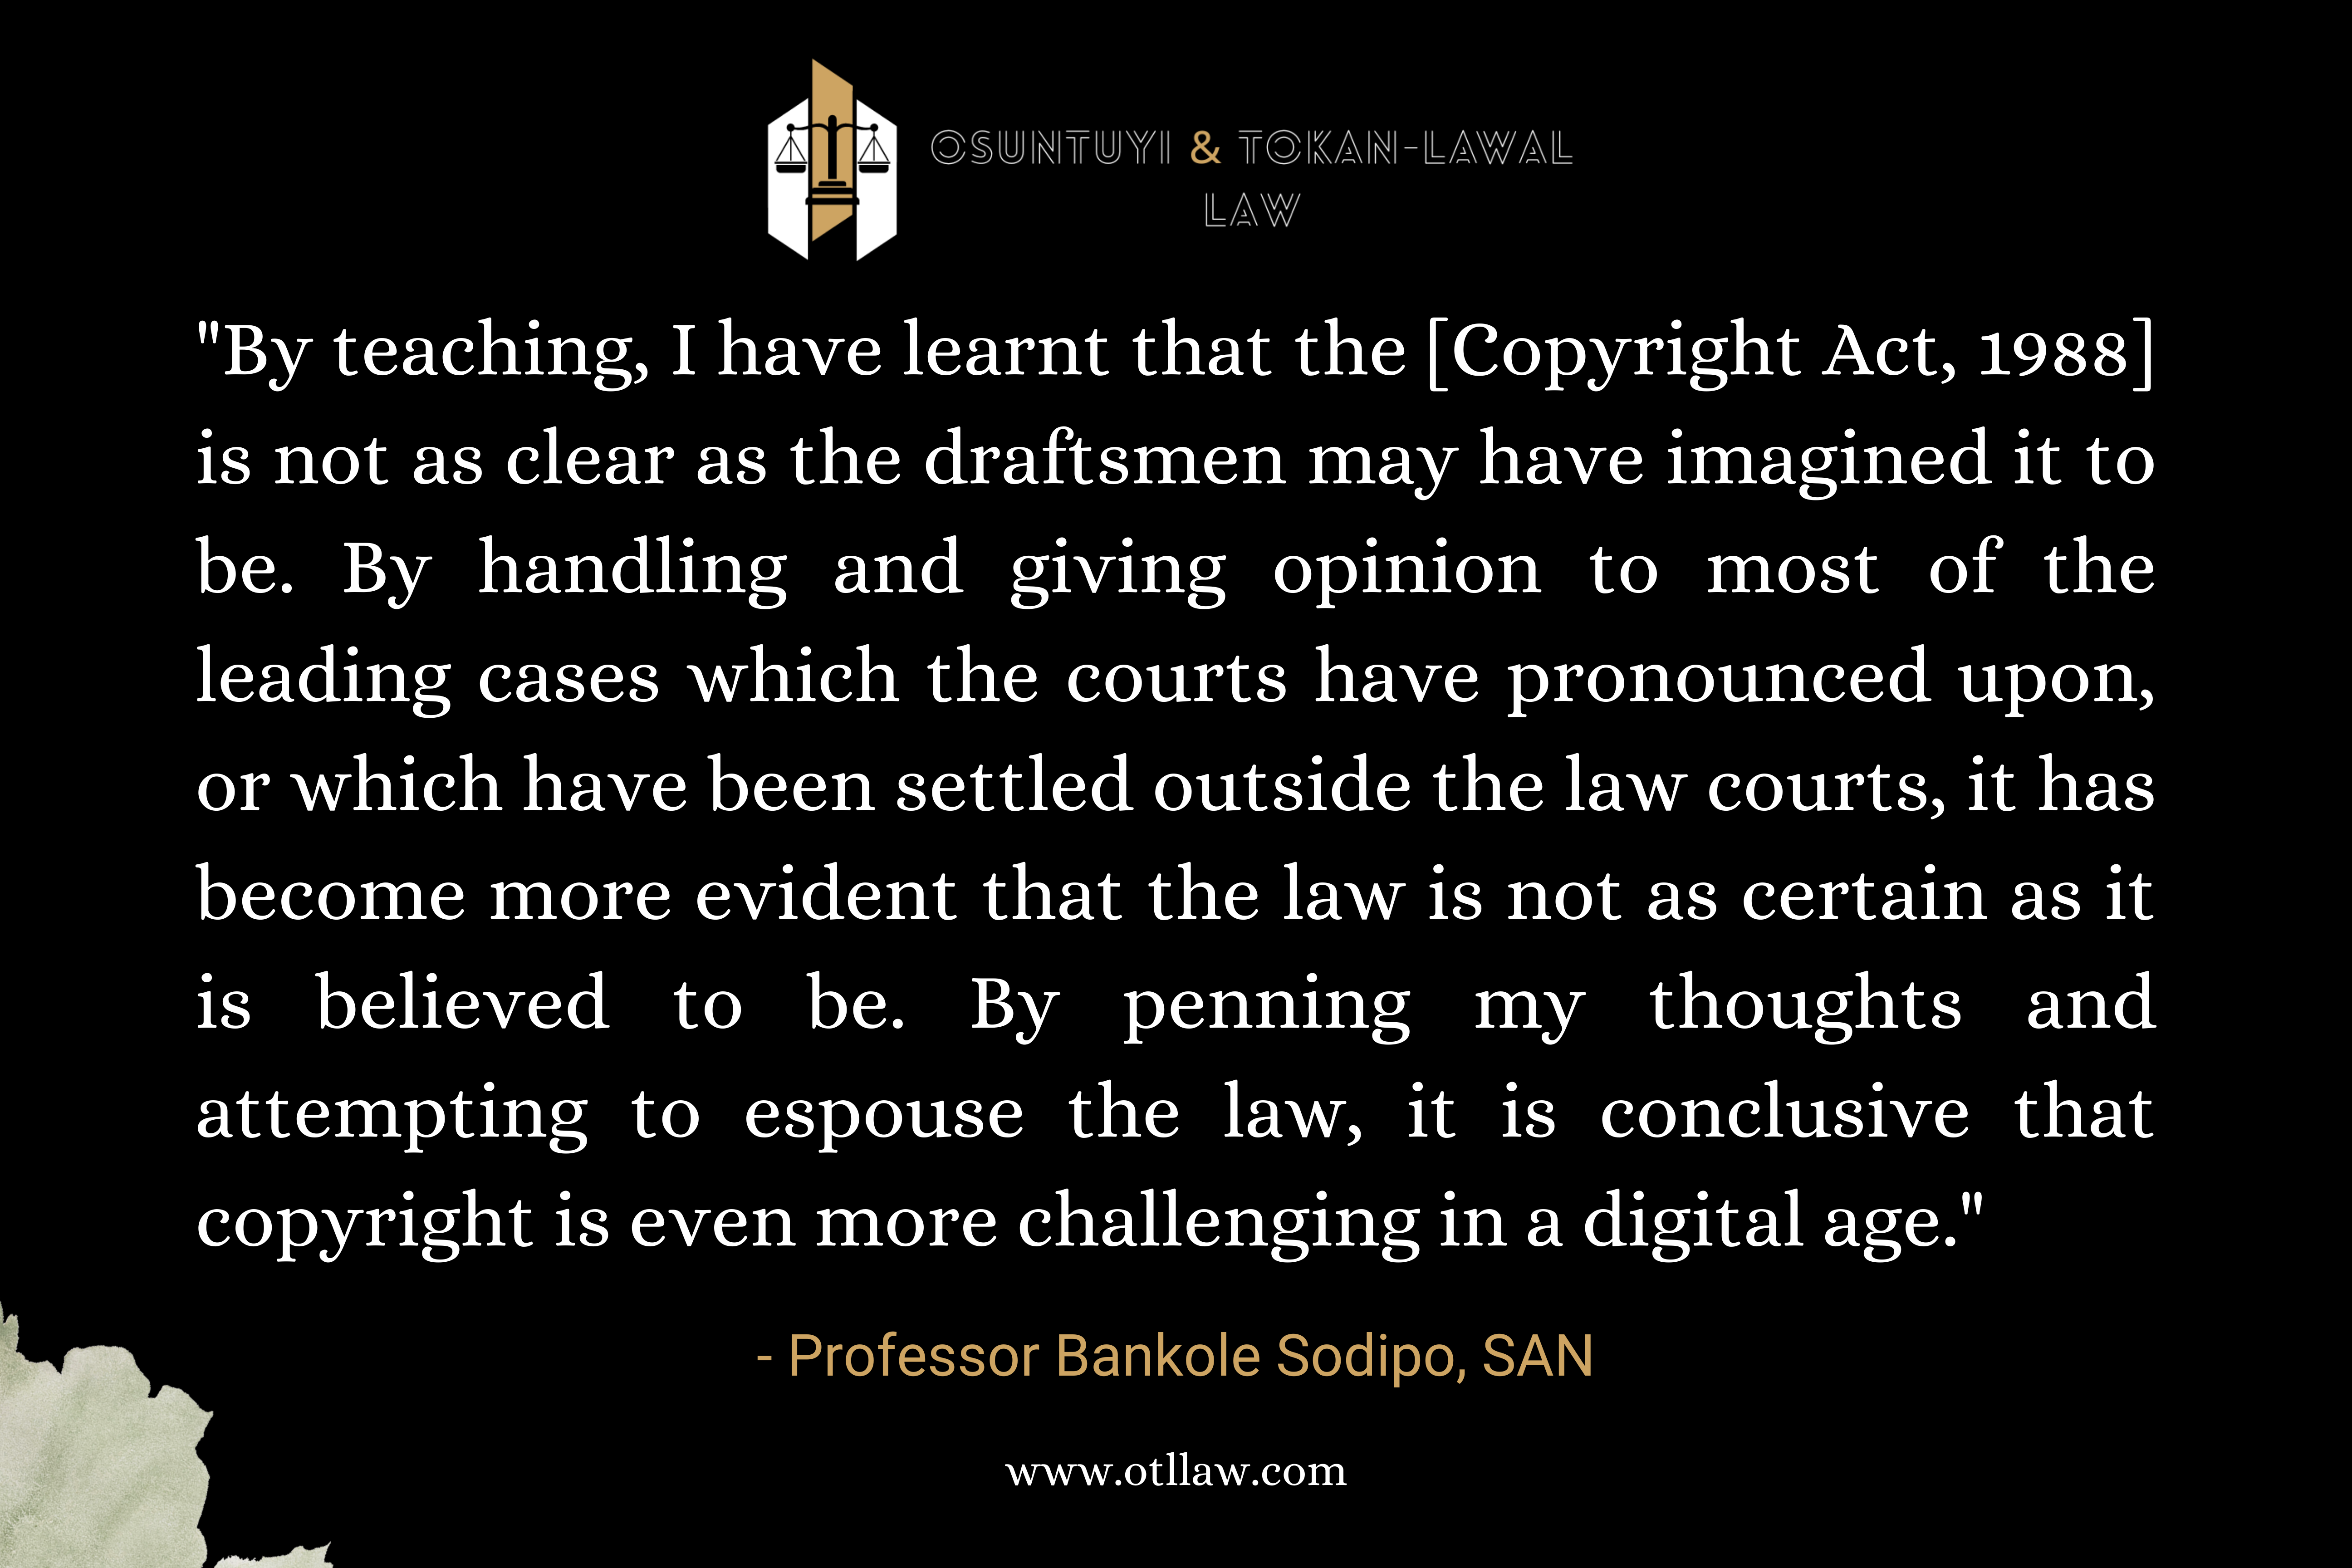 Professor Sodipo, SAN describes the complexities of the Copyright Act, 1988